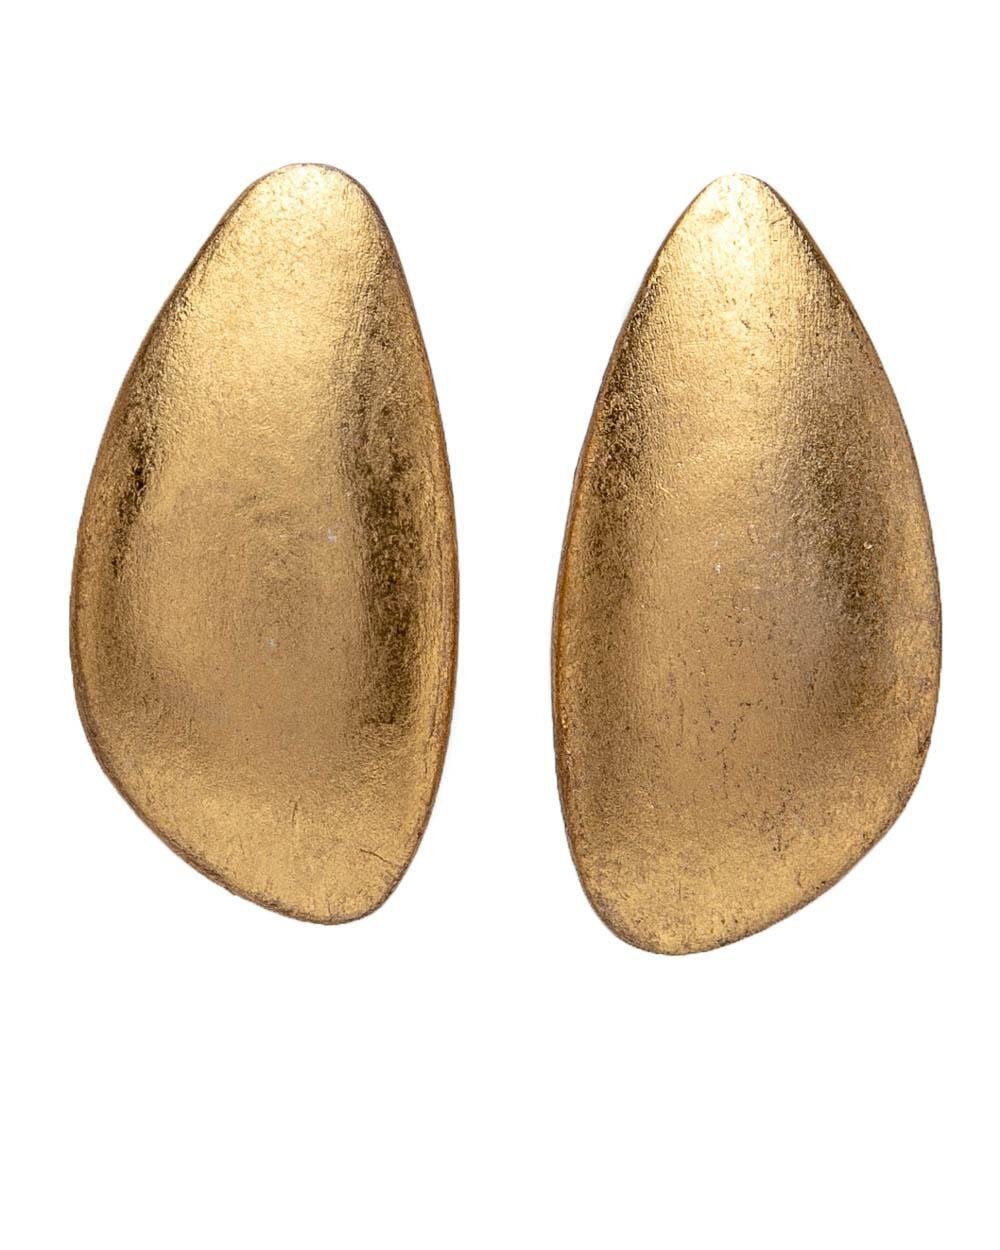 monies-gold-Gold-Leaf-Medellin-Earrings.jpeg